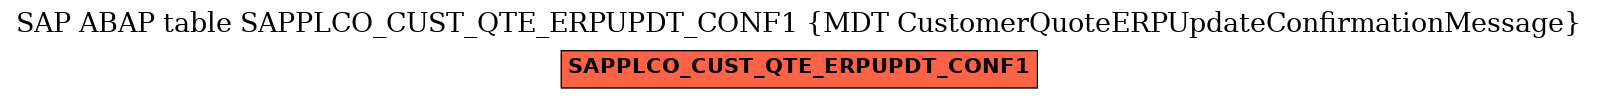 E-R Diagram for table SAPPLCO_CUST_QTE_ERPUPDT_CONF1 (MDT CustomerQuoteERPUpdateConfirmationMessage)